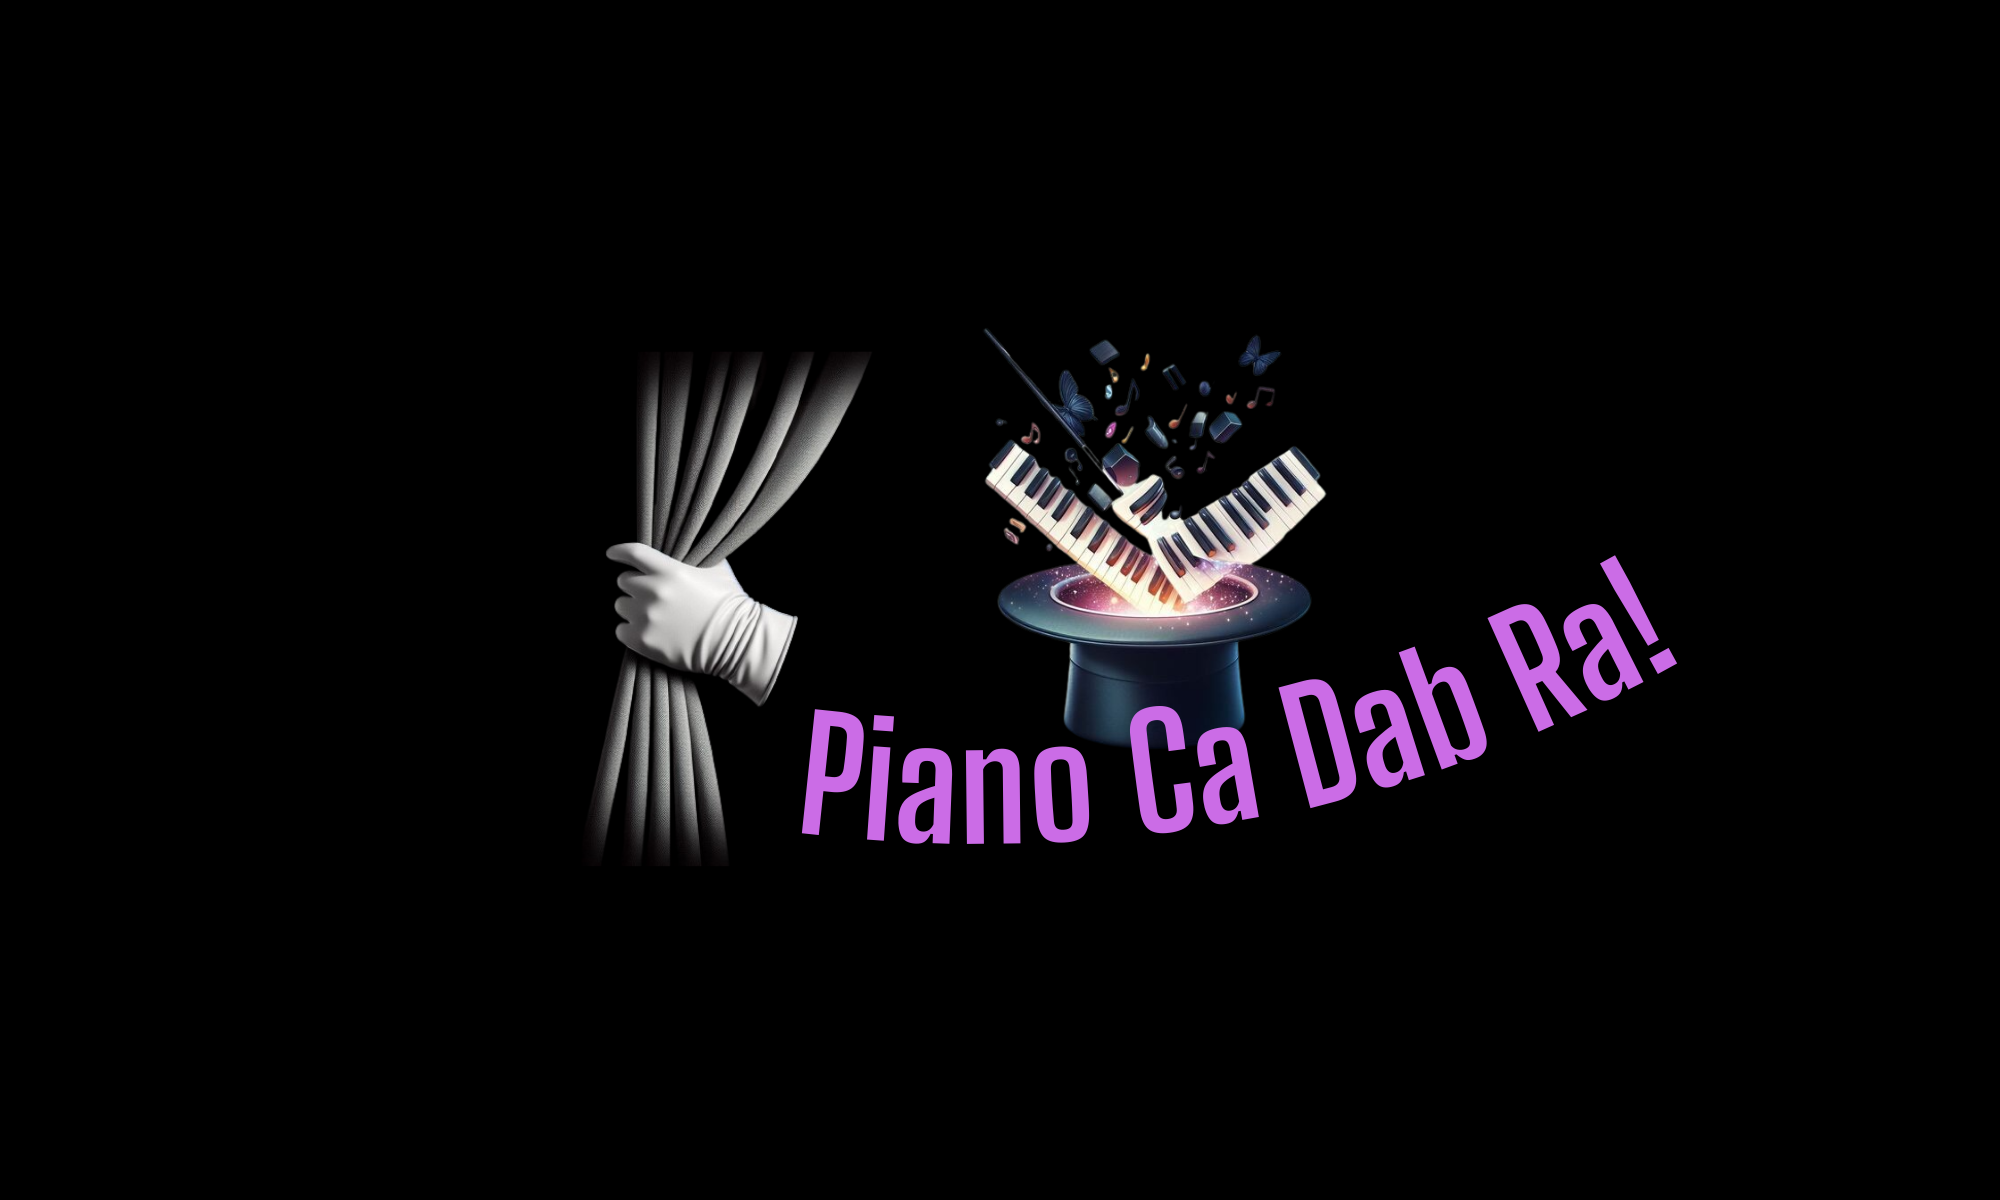 Welcome to Piano Ca Dab Ra!